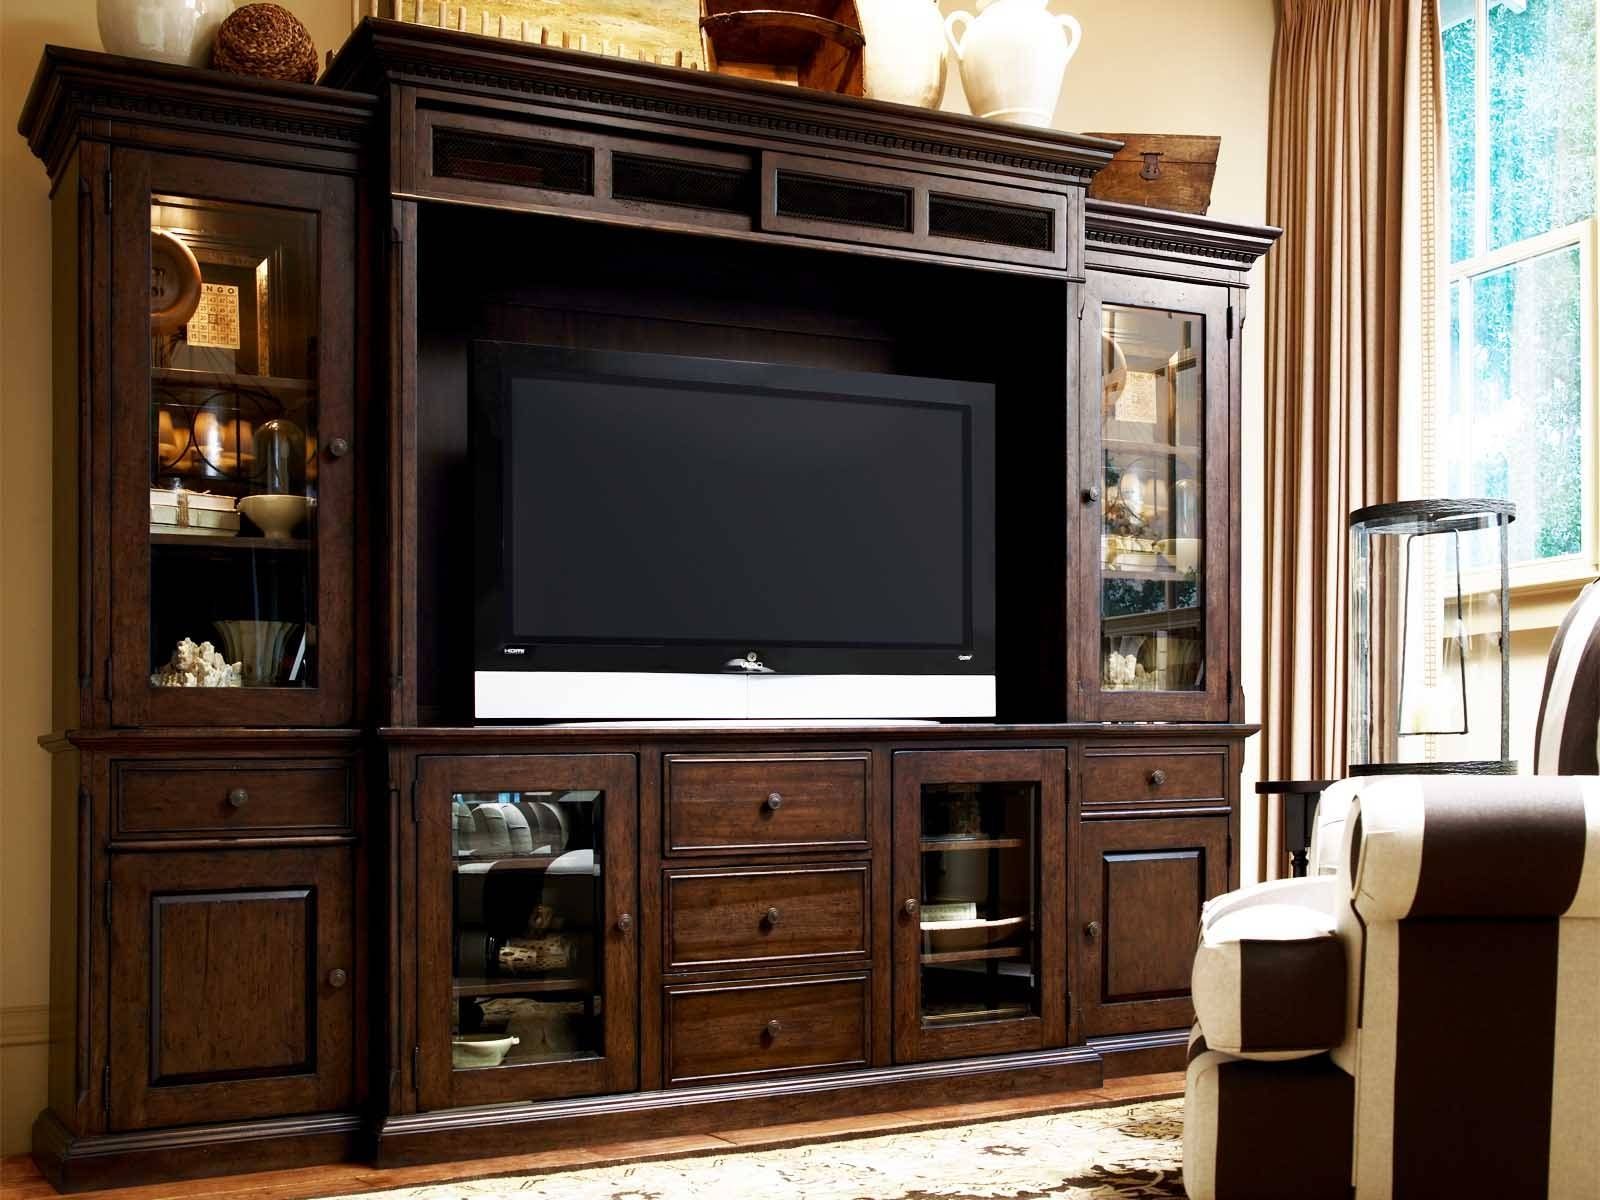 Excellent Polished Wood Enclosed Tv Cabinets For Flat Screens With Inside Enclosed Tv Cabinets For Flat Screens With Doors (View 14 of 15)